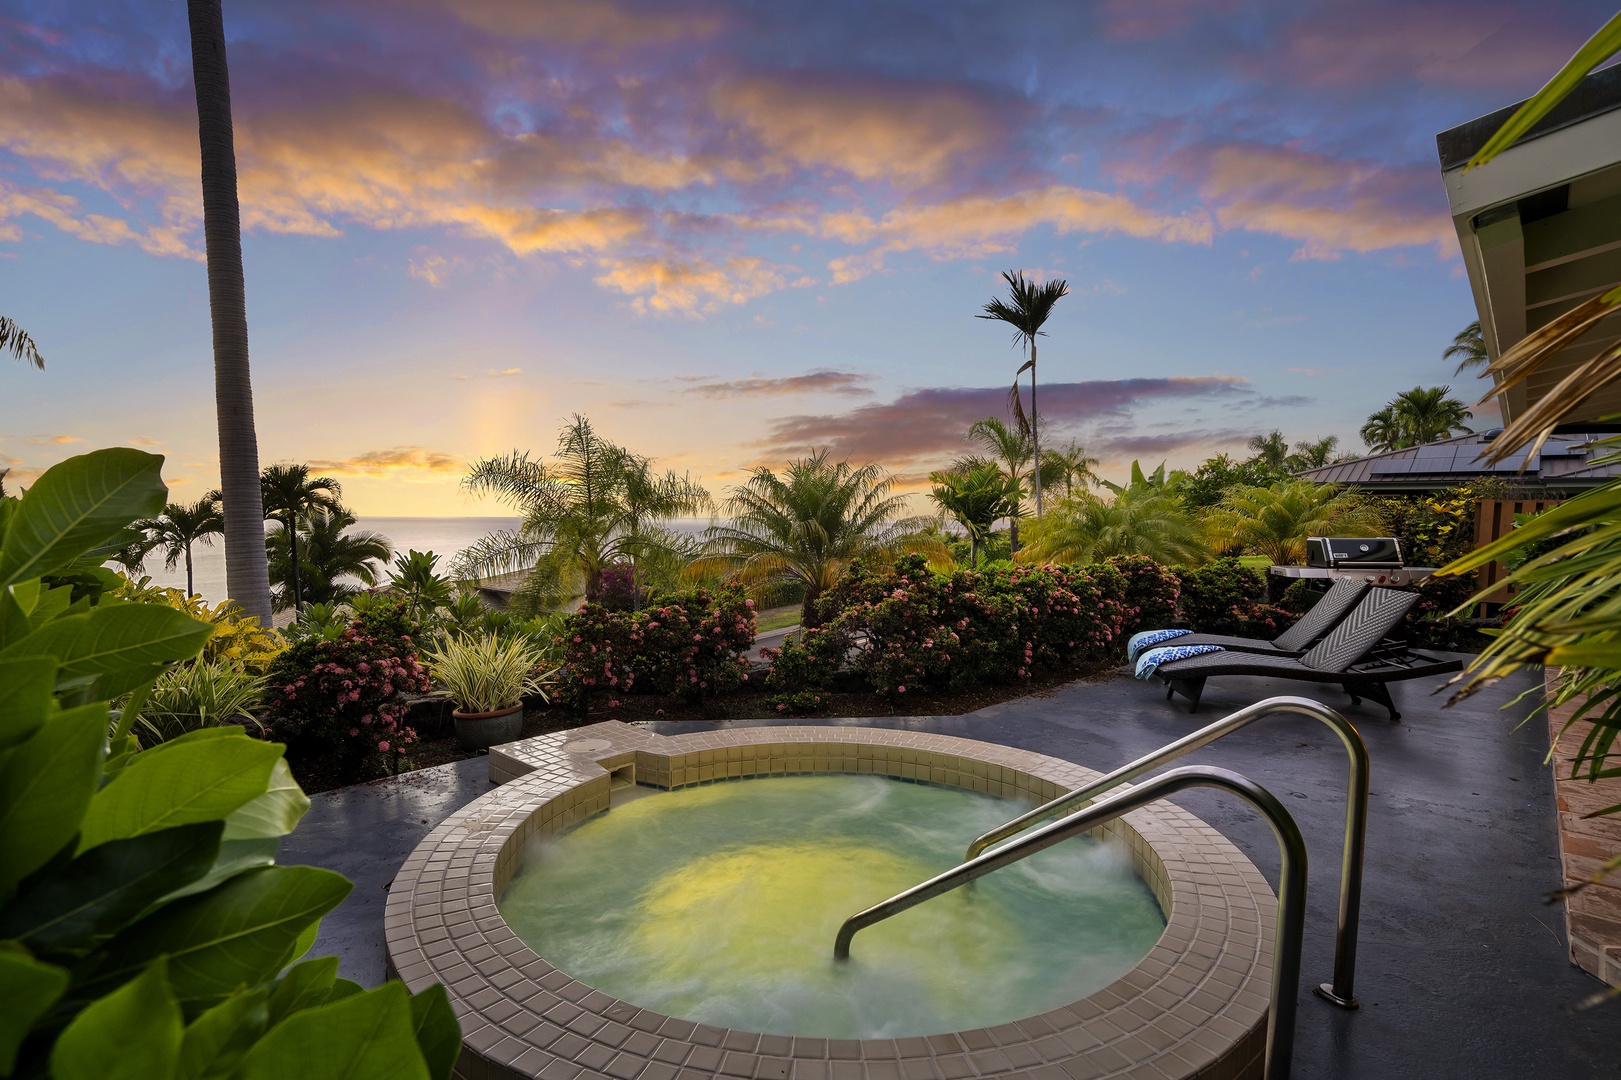 Kailua Kona Vacation Rentals, Pineapple House - Enjoy the hot tub with the sunset on the horizon